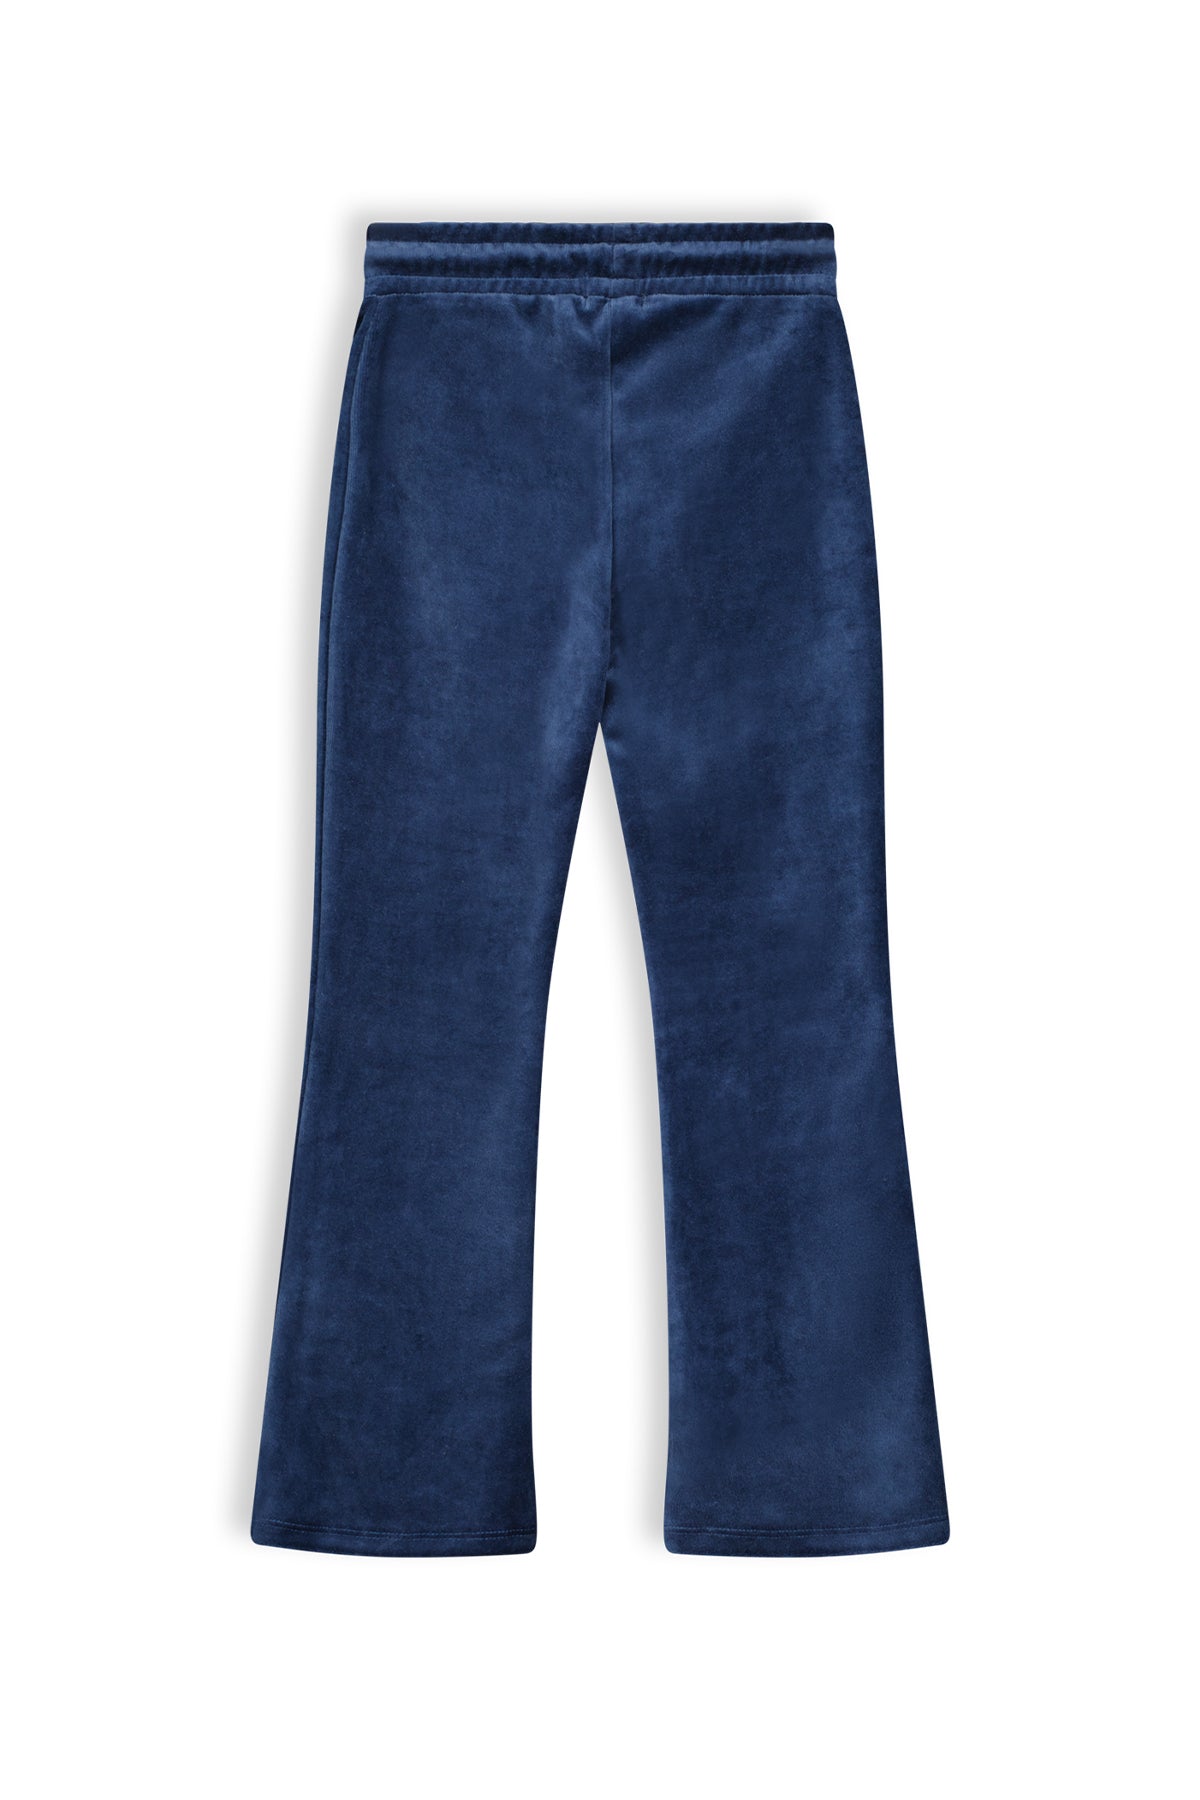 Meisjes Sady girls velours flared pants van NoNo in de kleur Ensign Blue in maat 134-140.